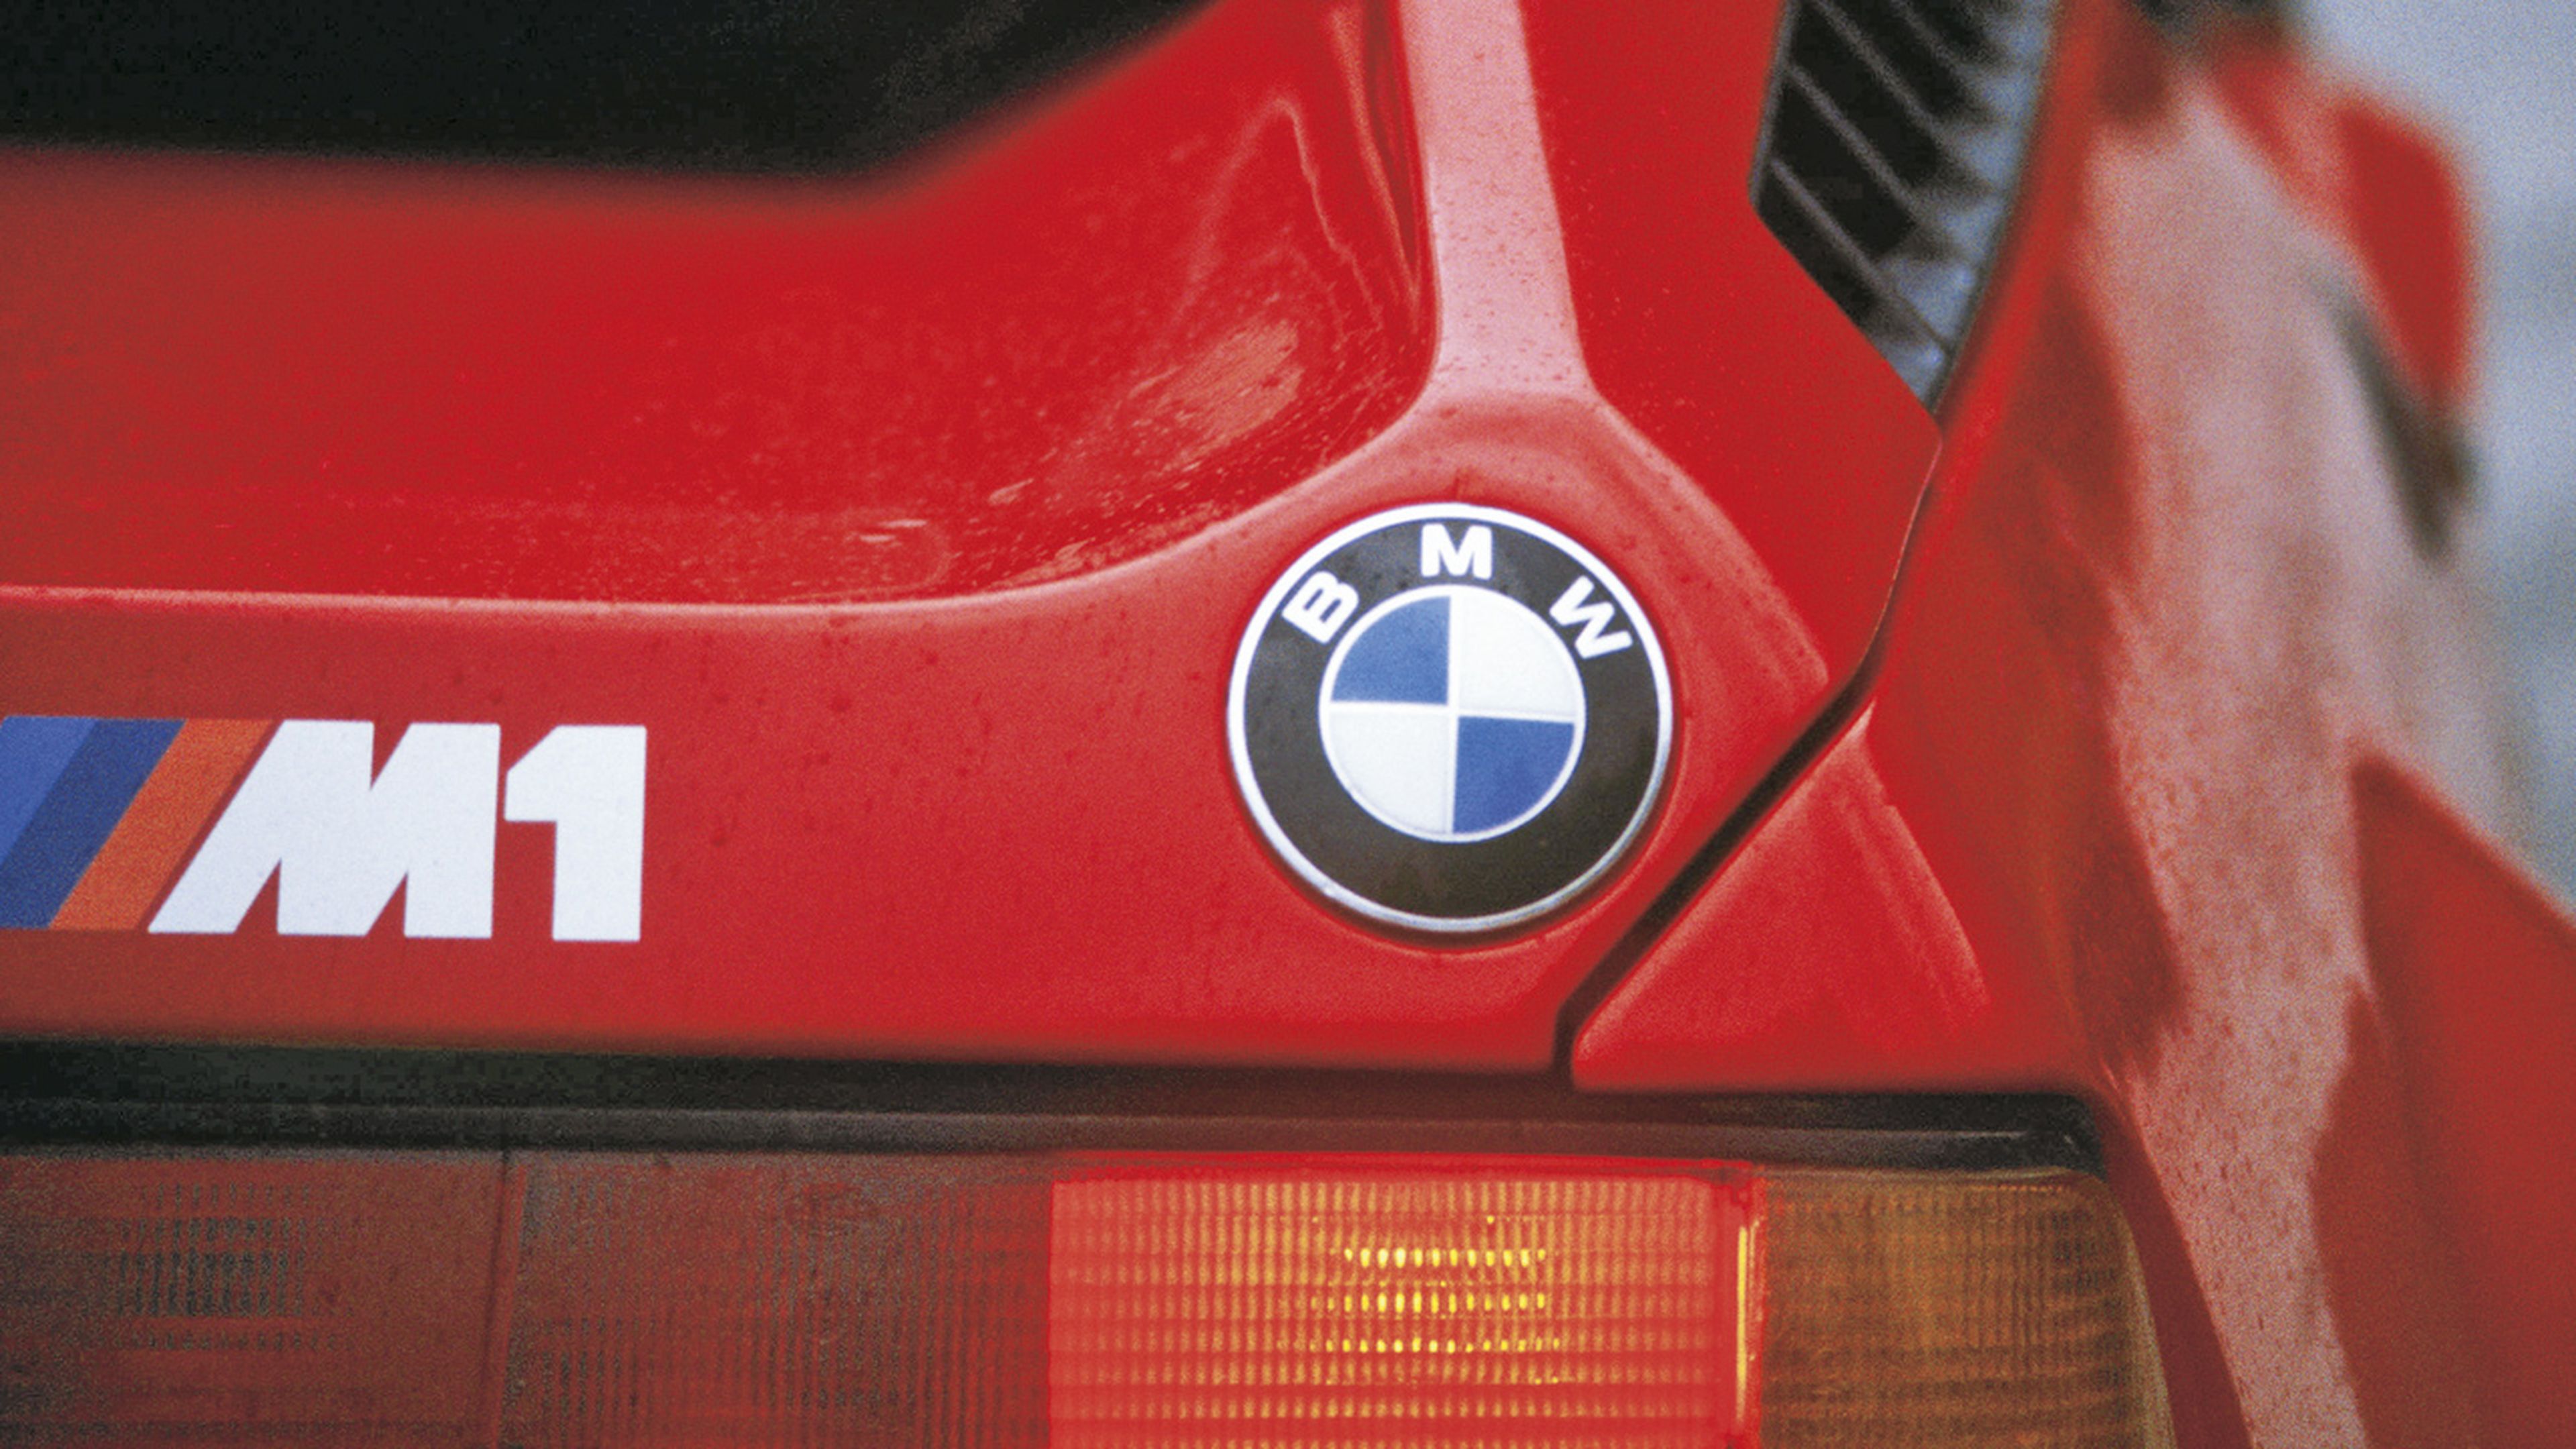 Detalle logo BMW M1